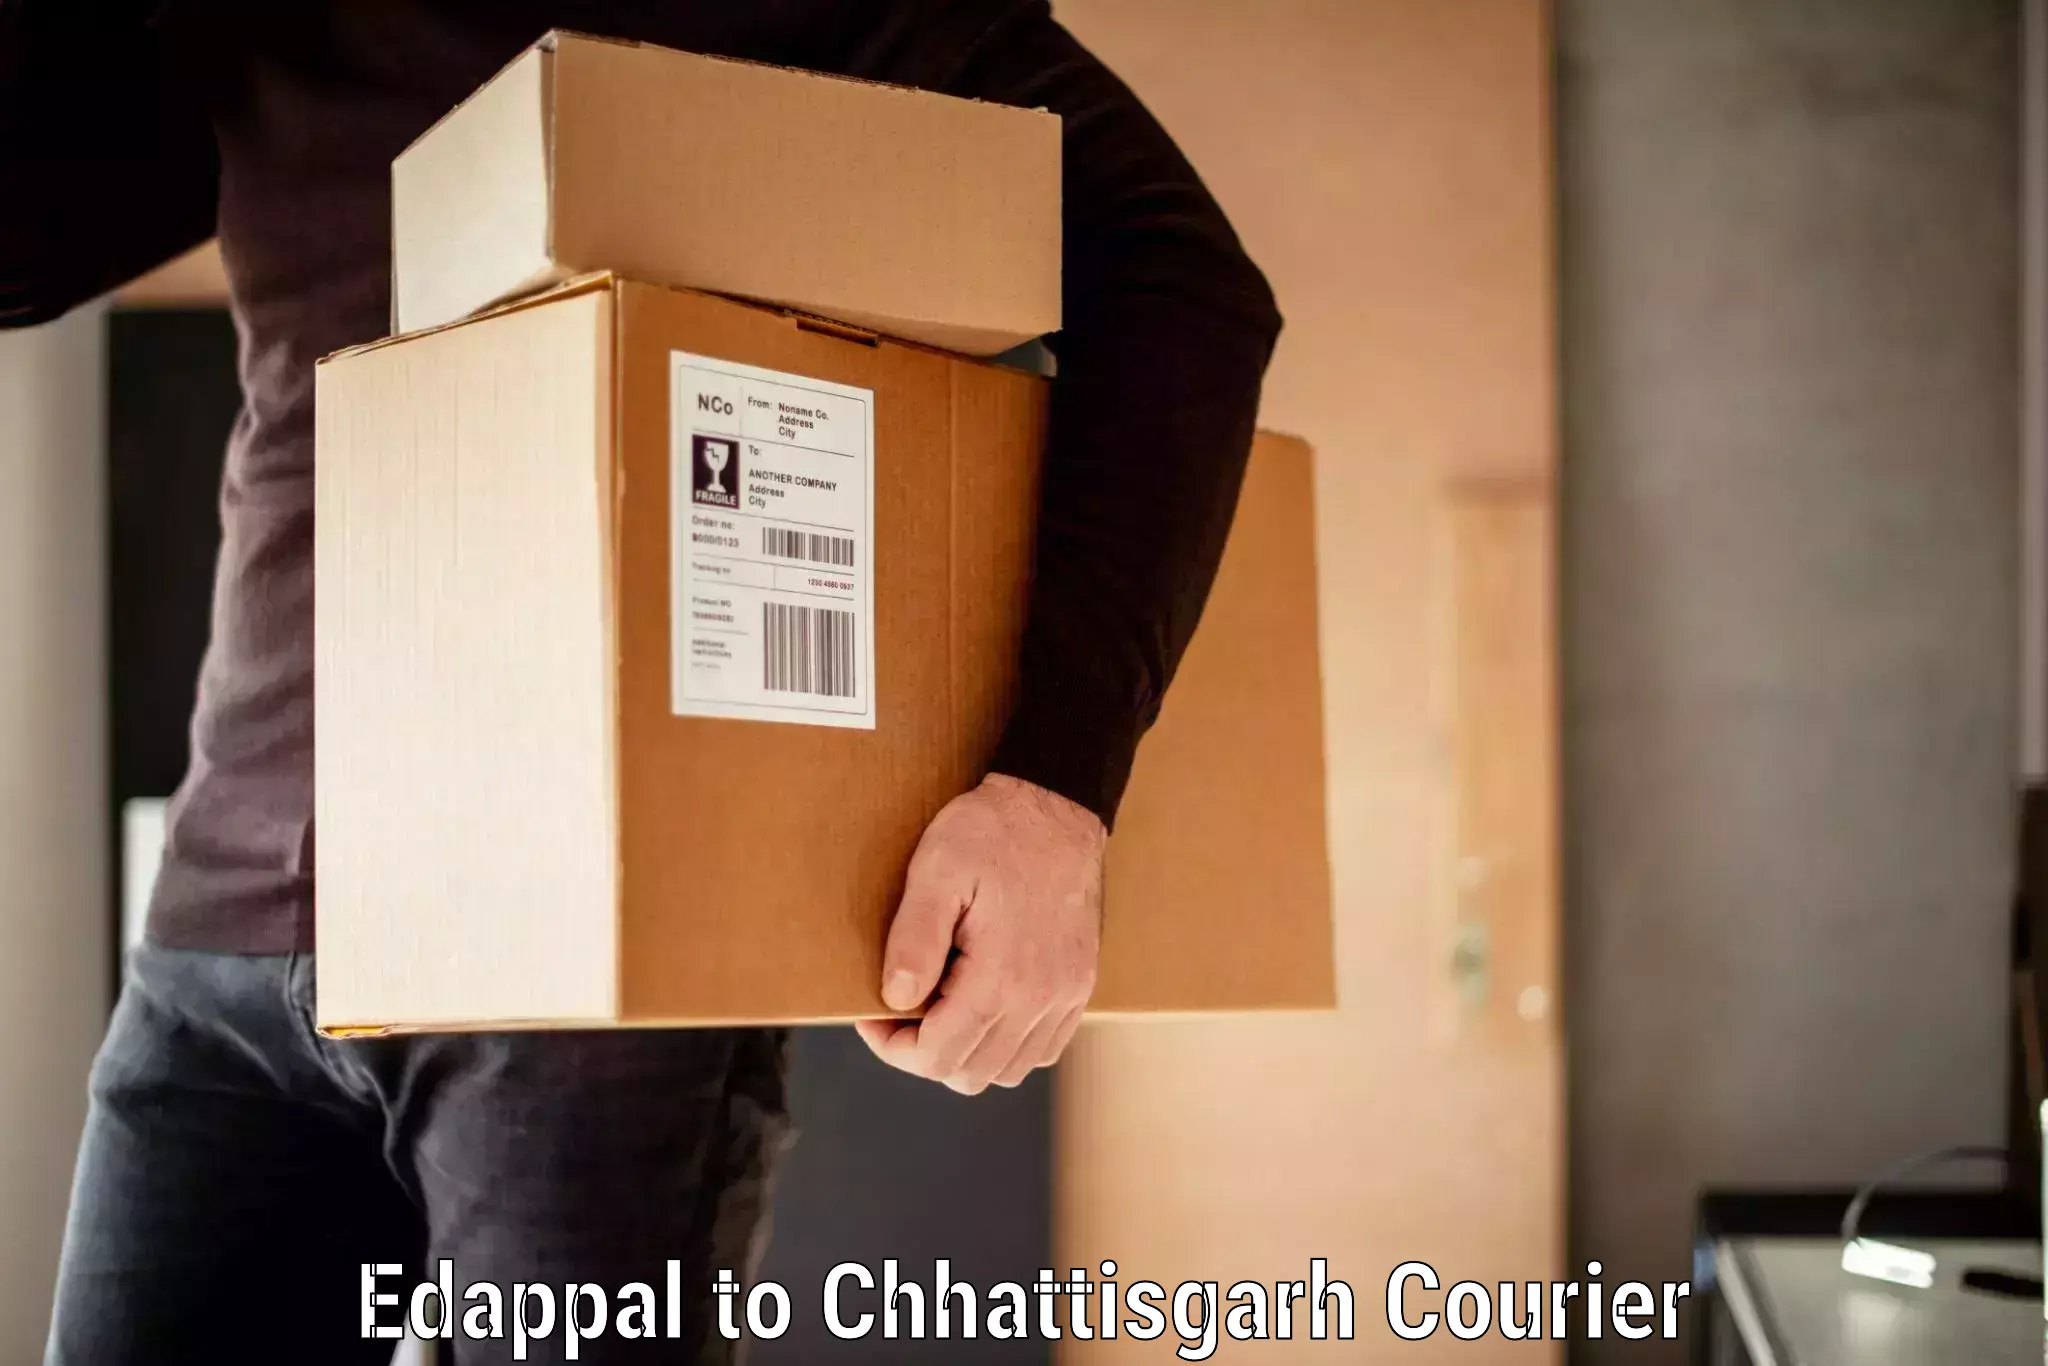 Baggage transport network Edappal to Raipur